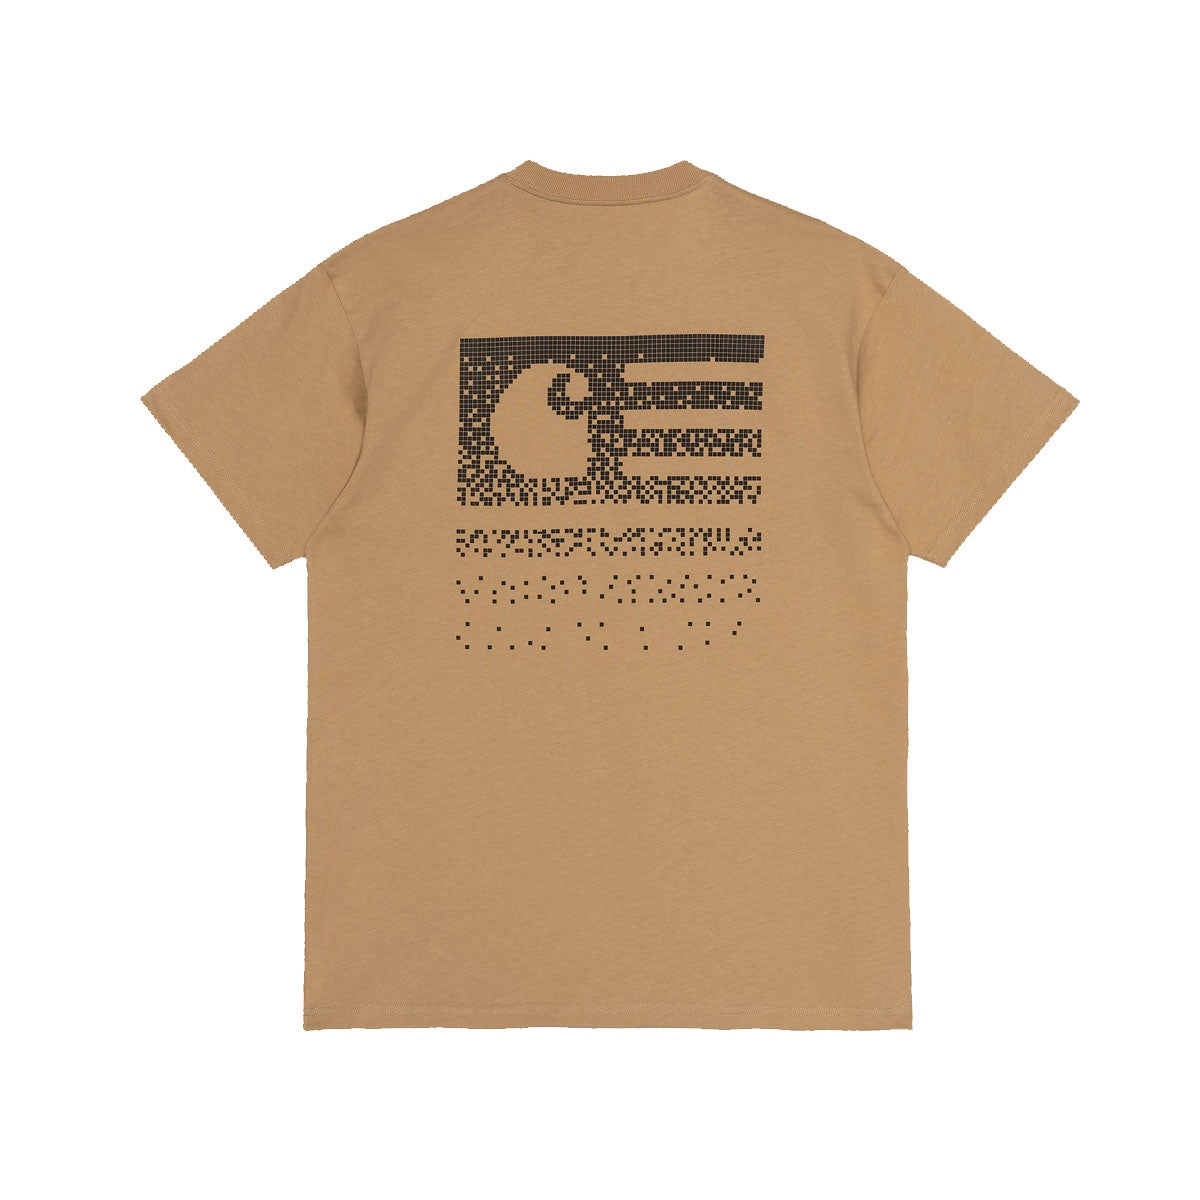 Carhartt WIP S/S Fade State T-Shirt Dusty Hamilton Brown Black